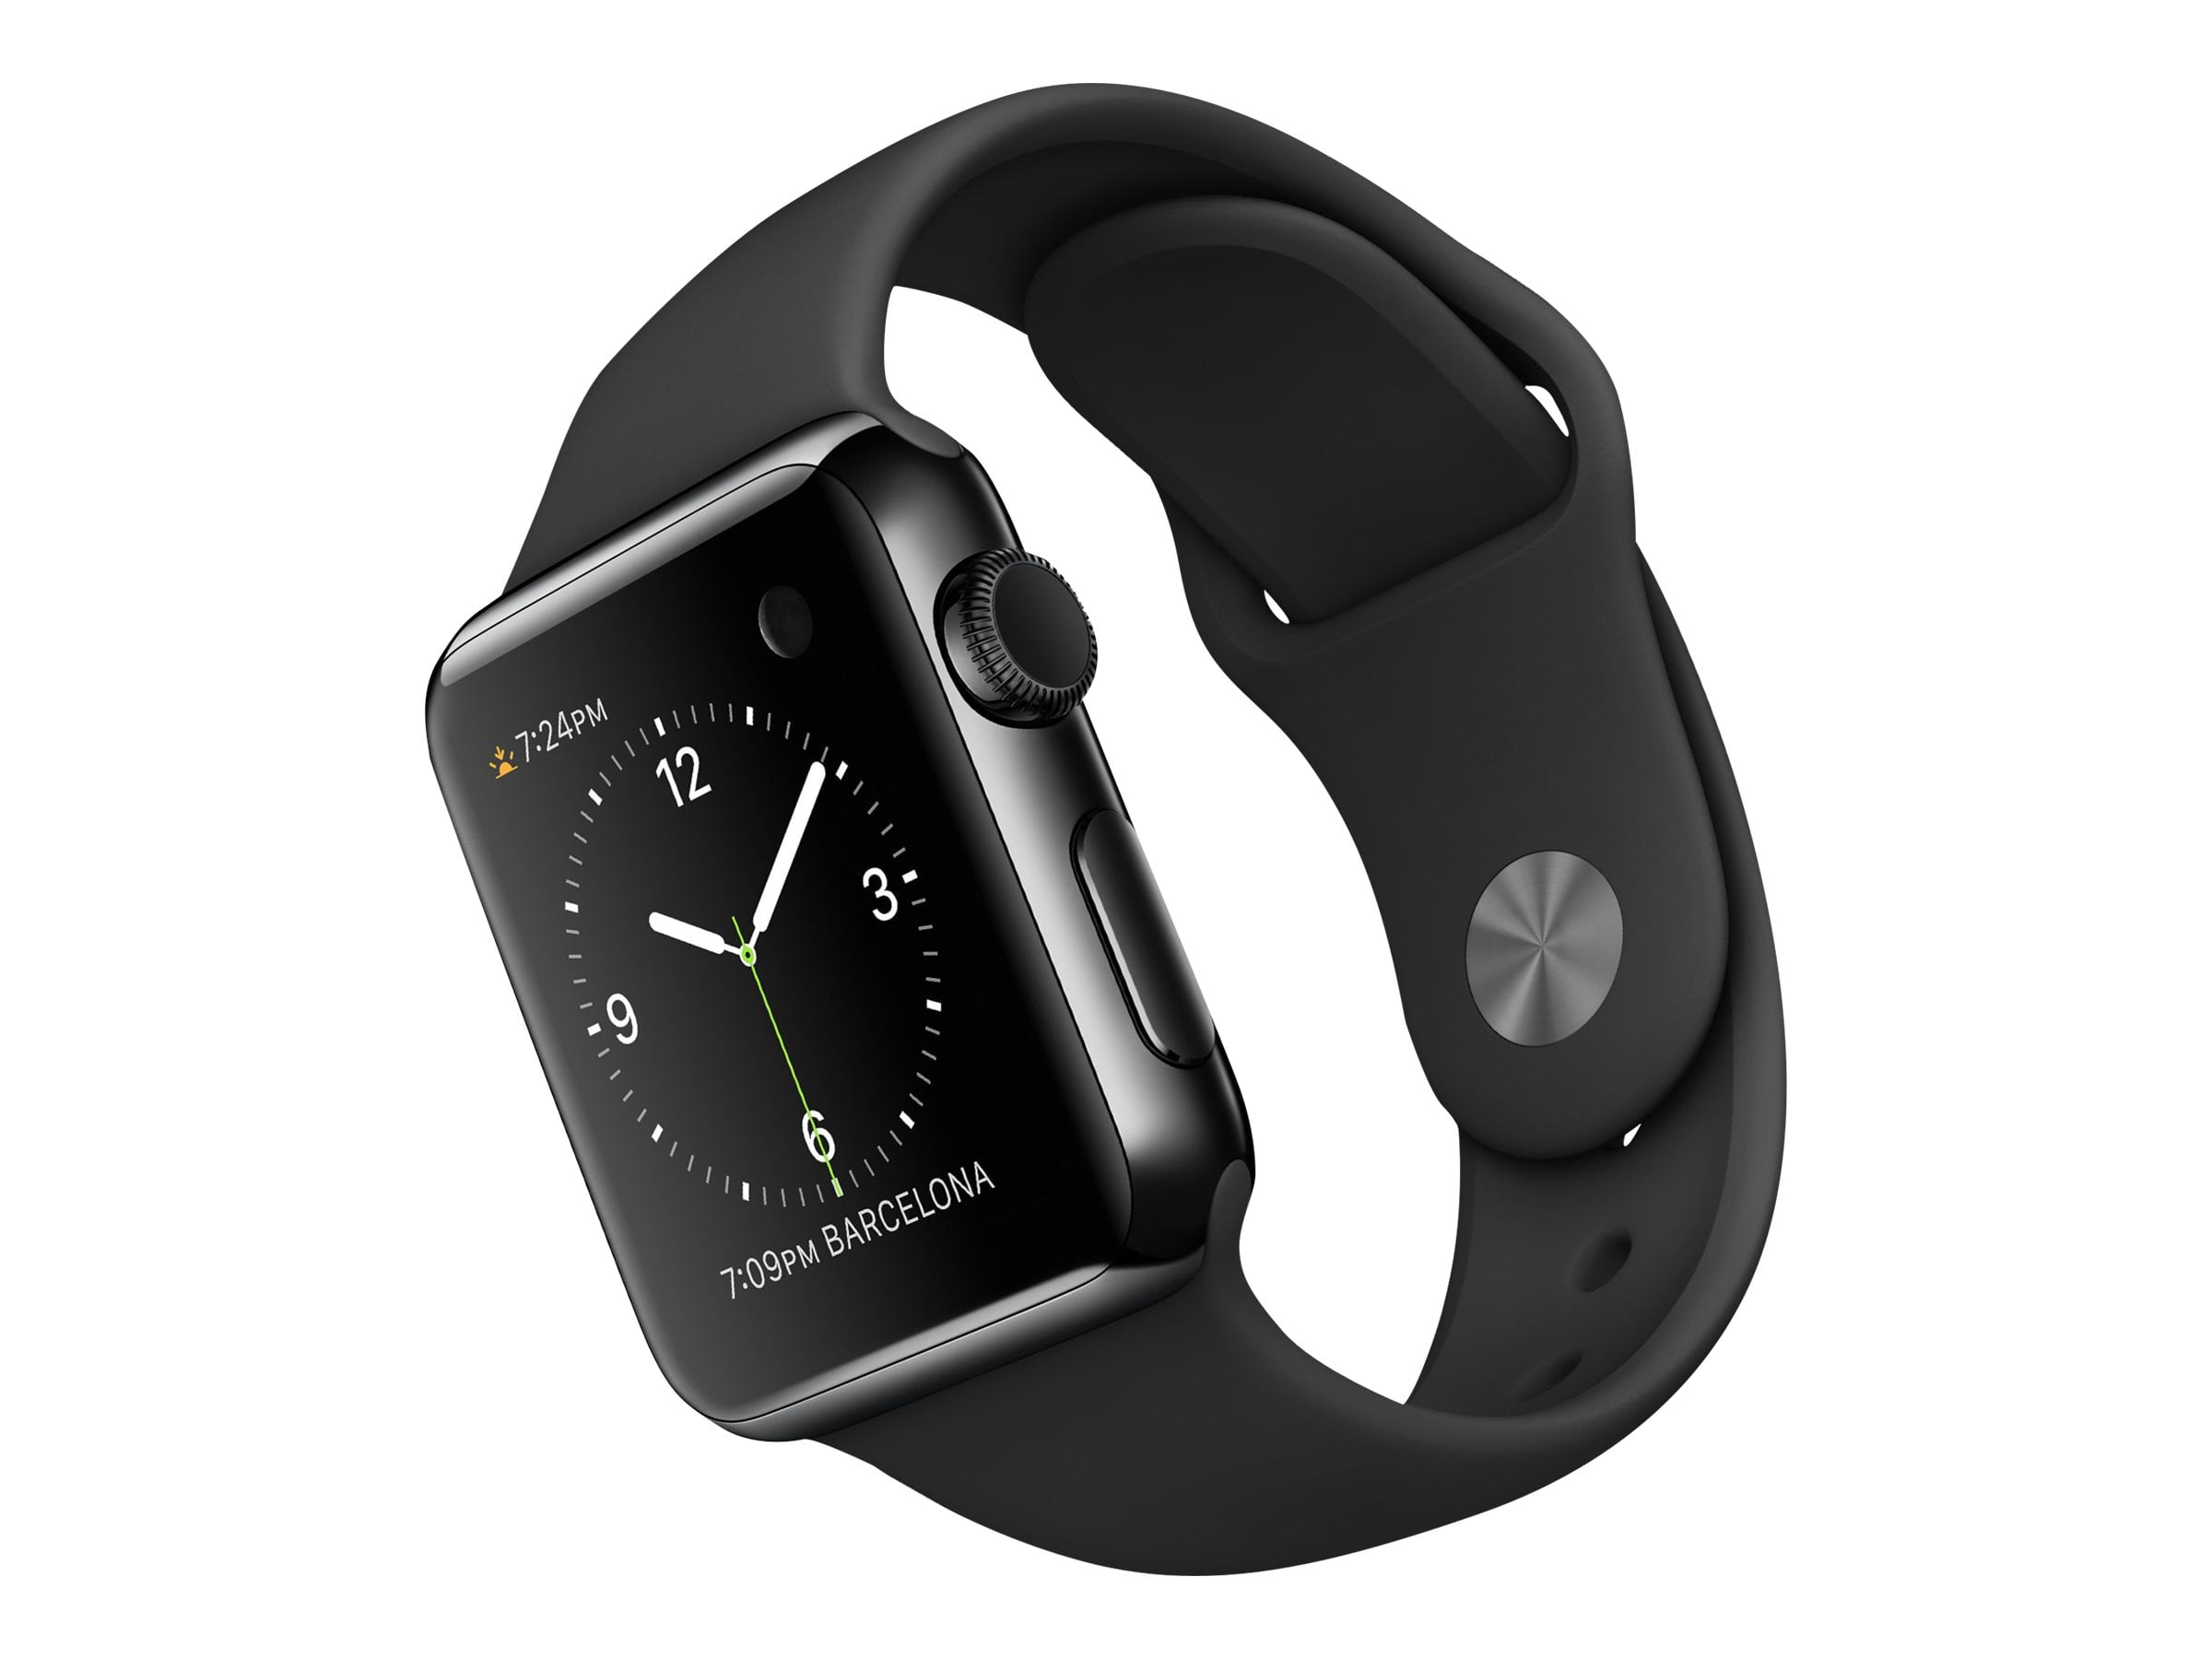 Apple Watch Original - 38 mm - space black stainless steel - smart